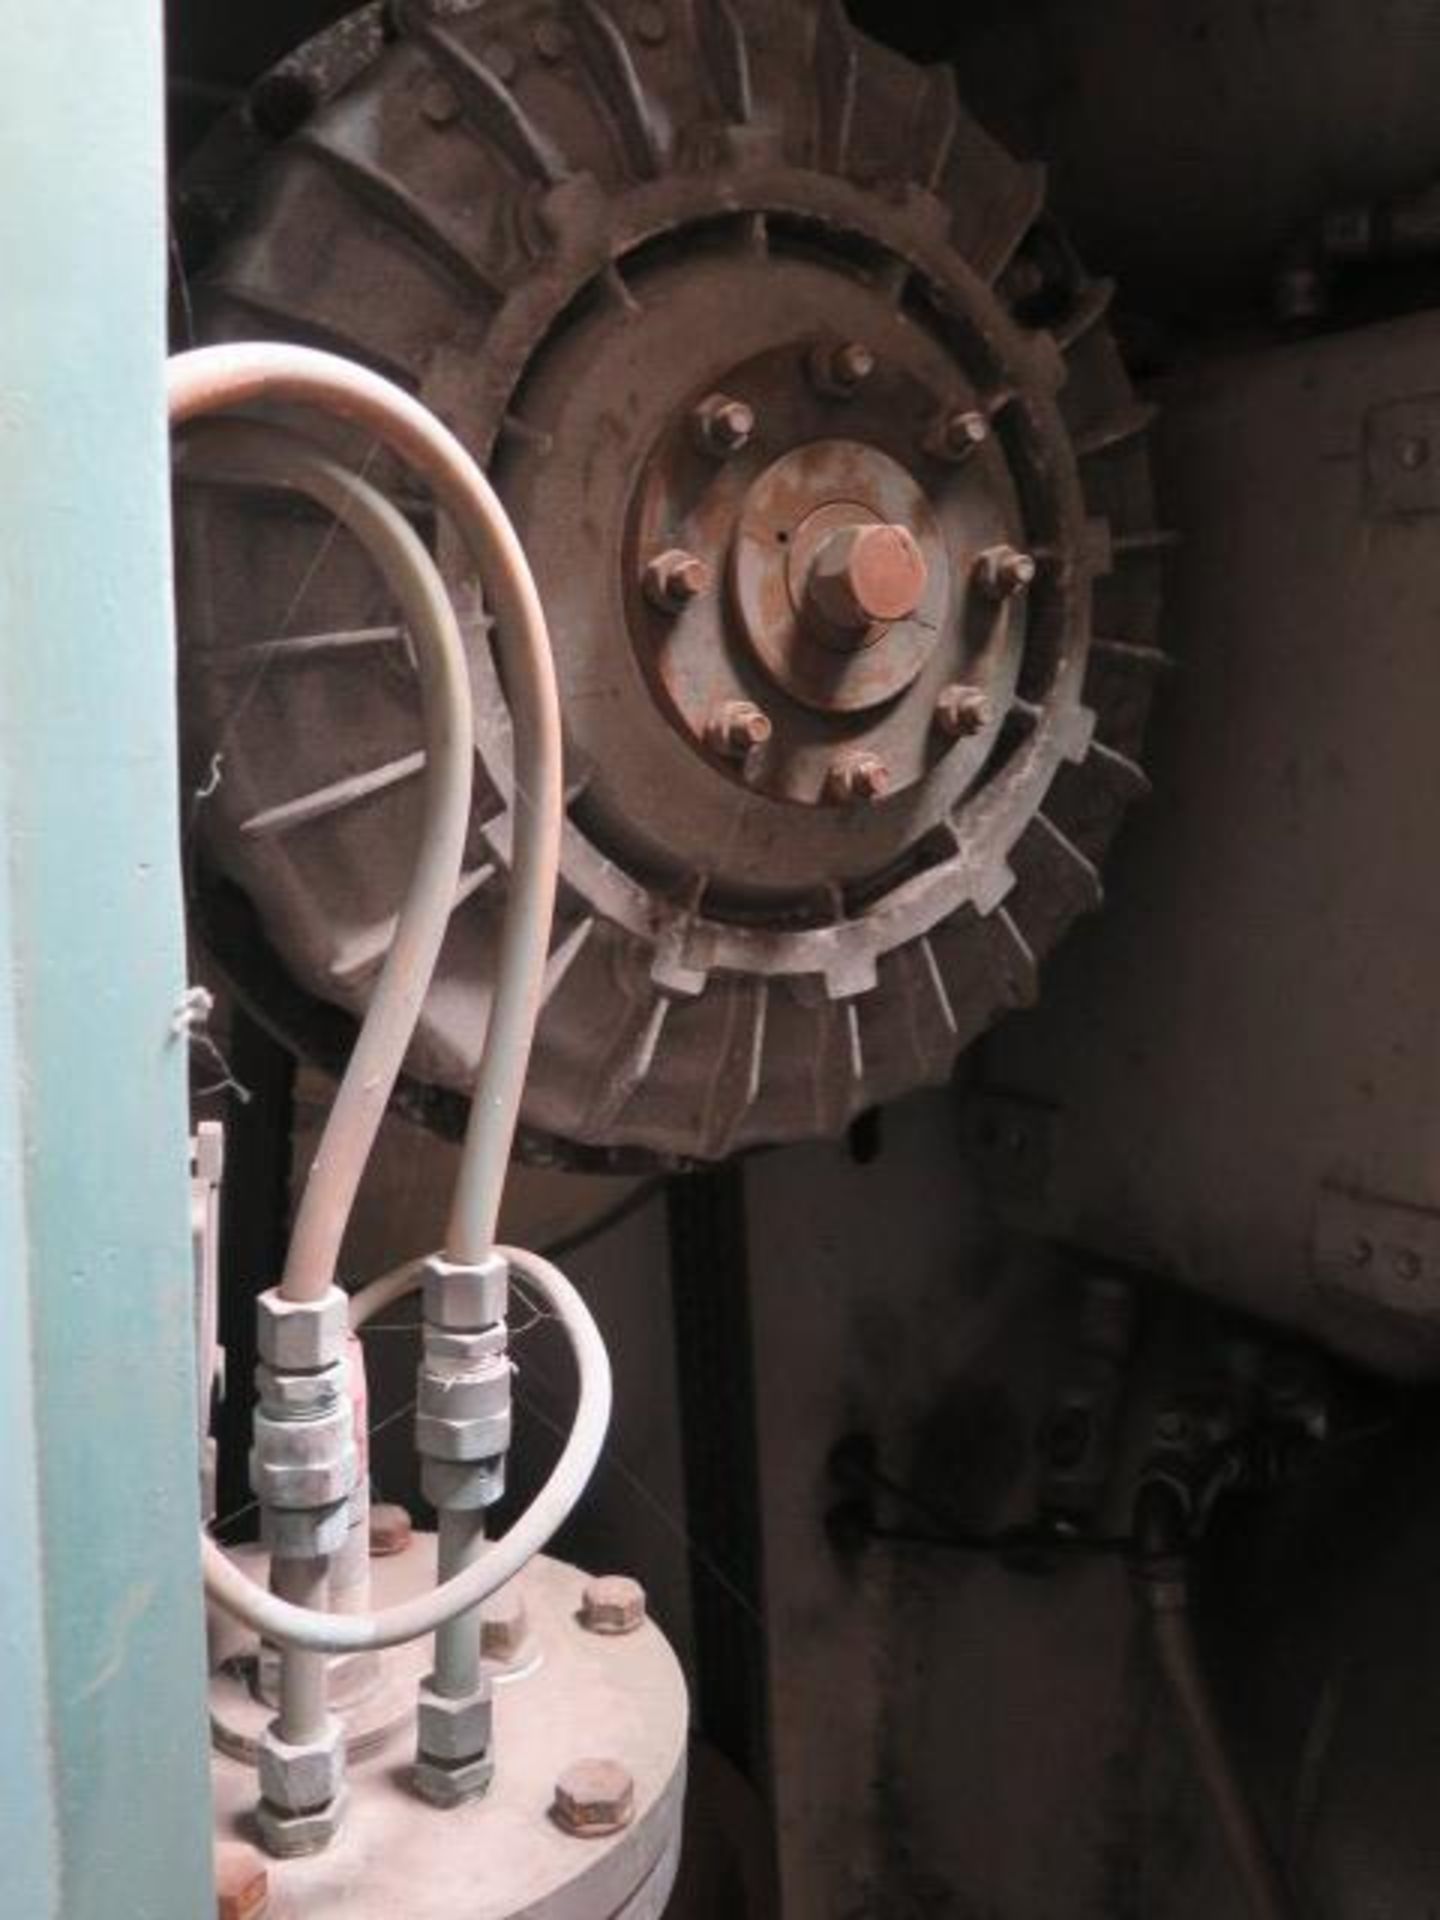 Netzsch LMC 60-(E) 57 Liter Horizontal Grinding Mill s/n 205-110 (SOLD AS-IS - NO WARRANTY) - Image 9 of 11